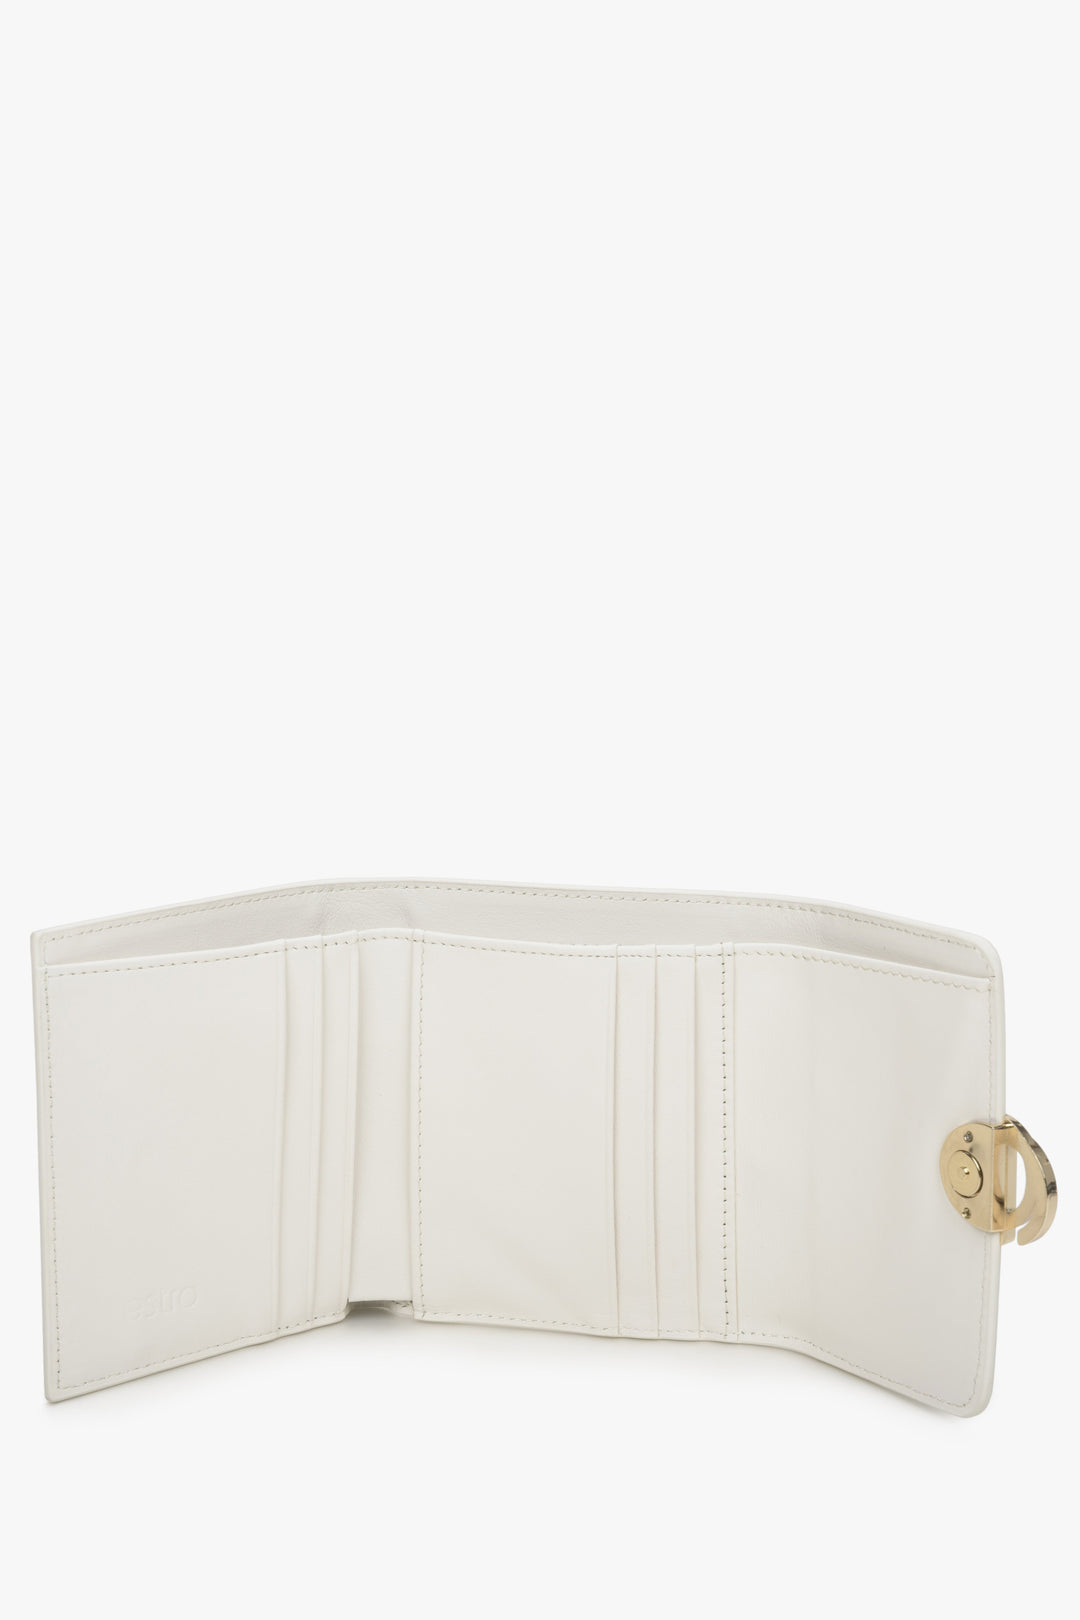 Tri-fold women's light beige wallet - interior.